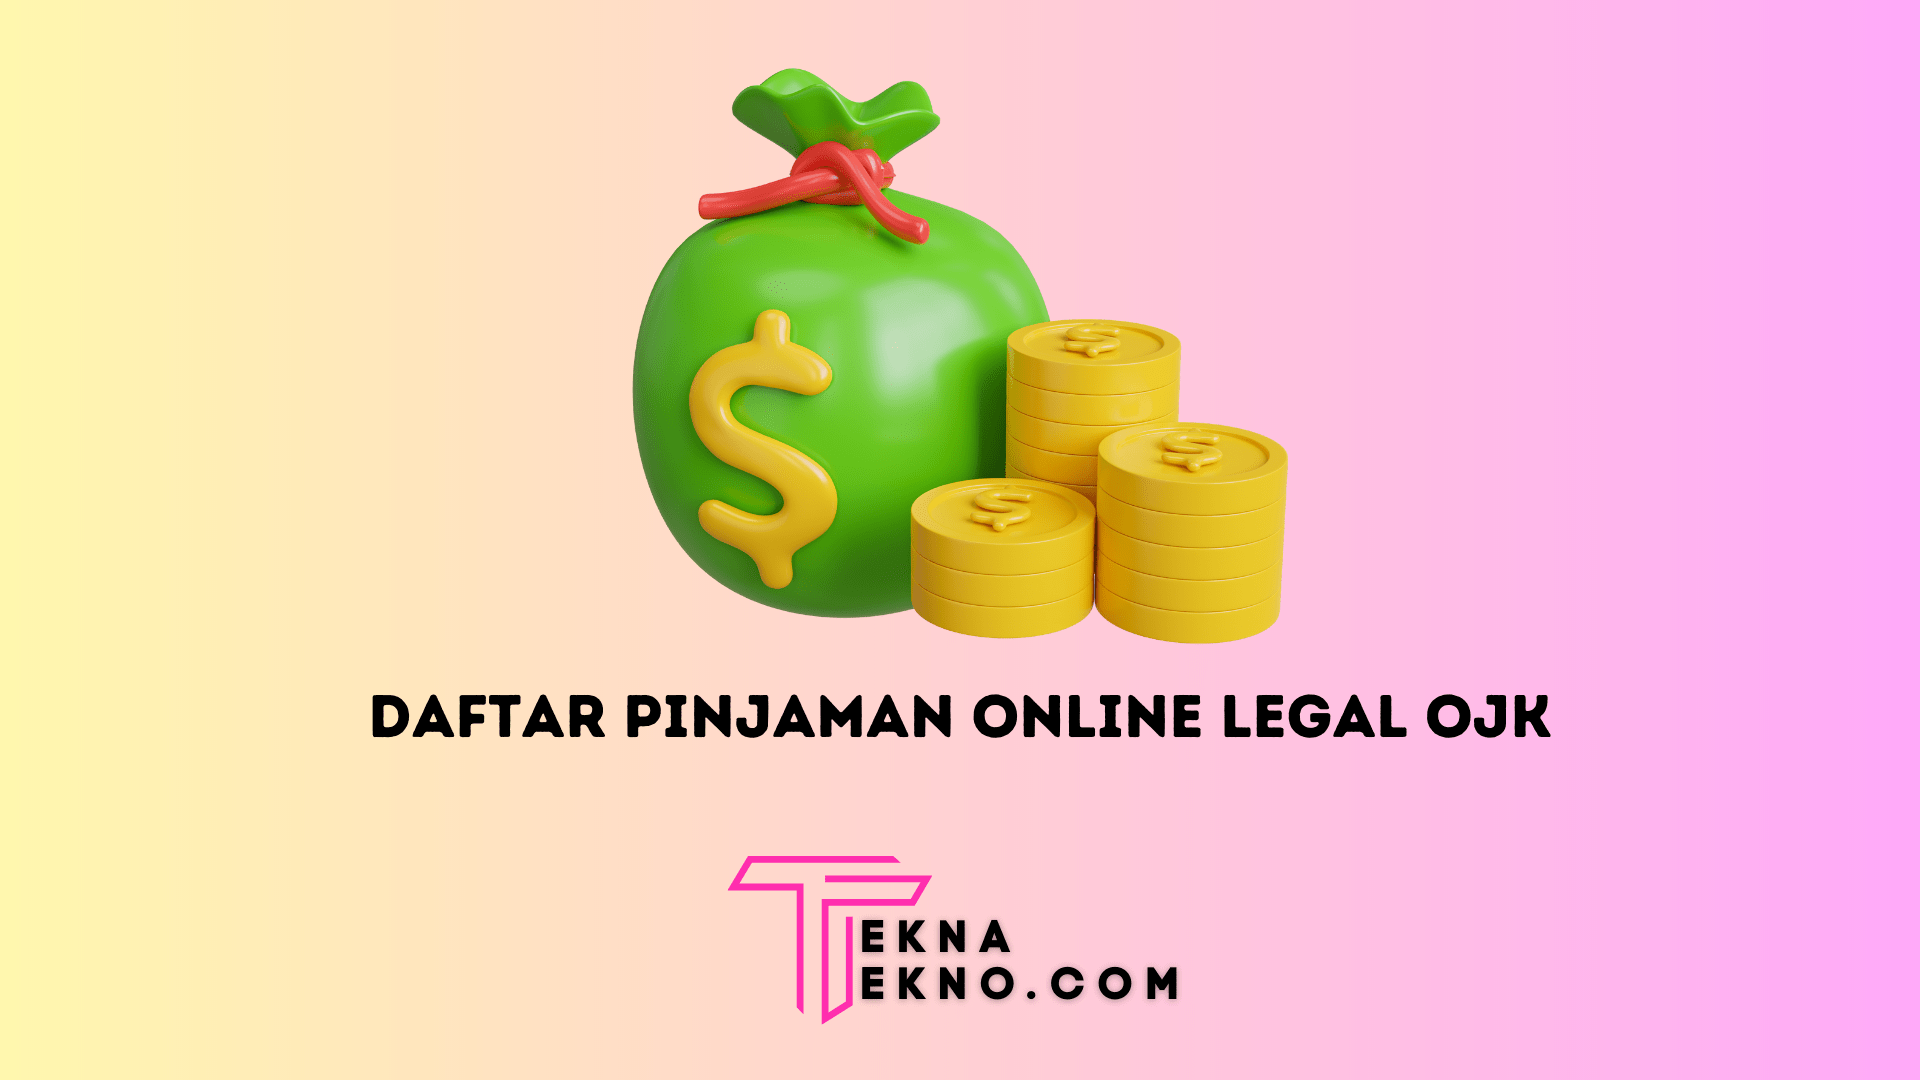 Daftar Terbaru 102 Pinjaman Online Legal Terdaftar dan Berizin OJK